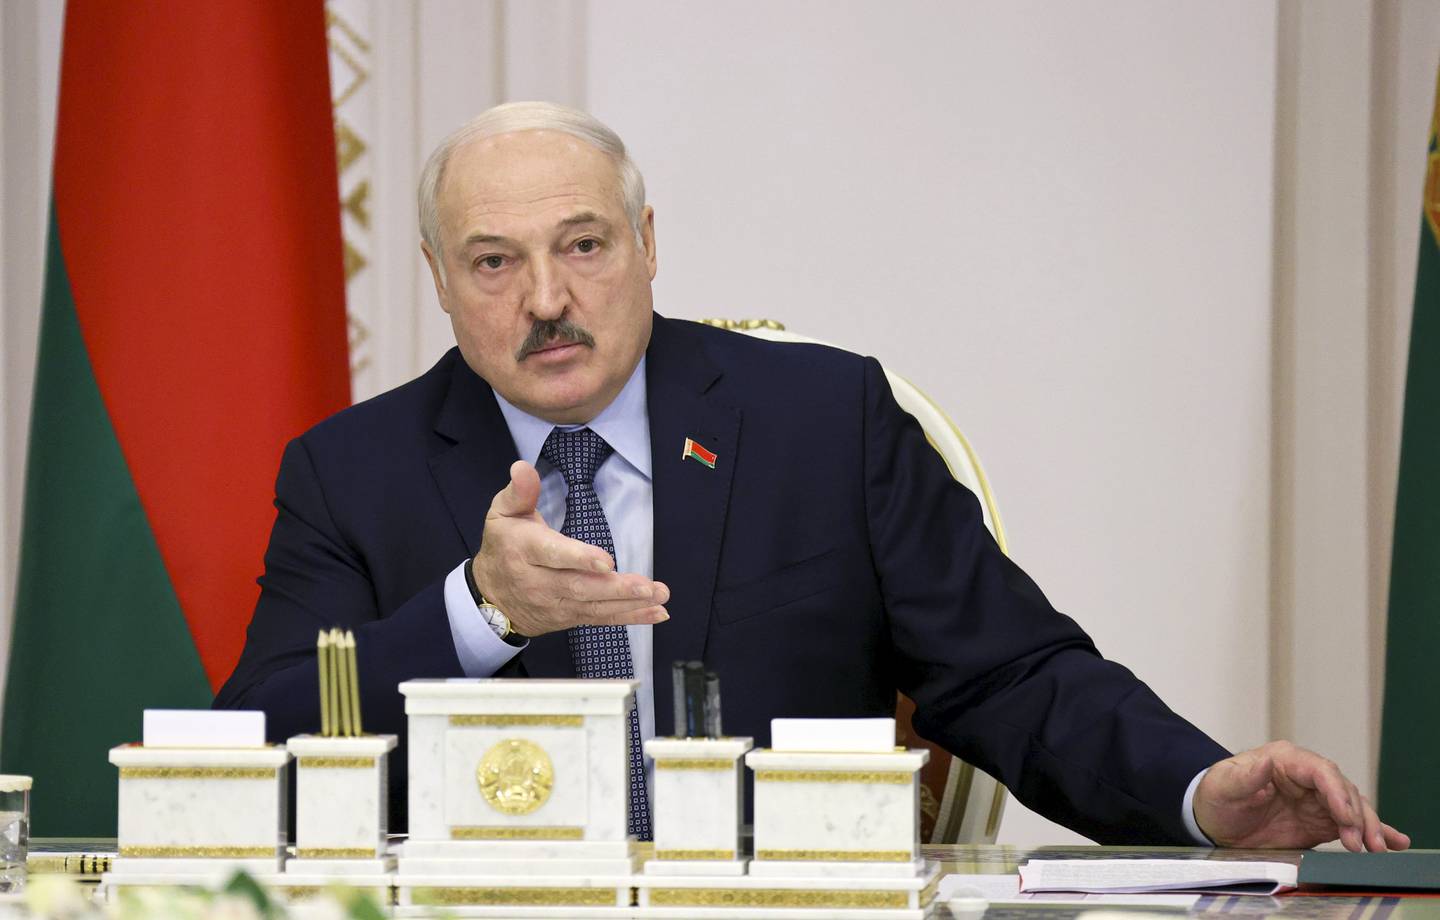 Belarusian President Alexander Lukashenko has been accused of encouraging a surge of migrants to EU borders